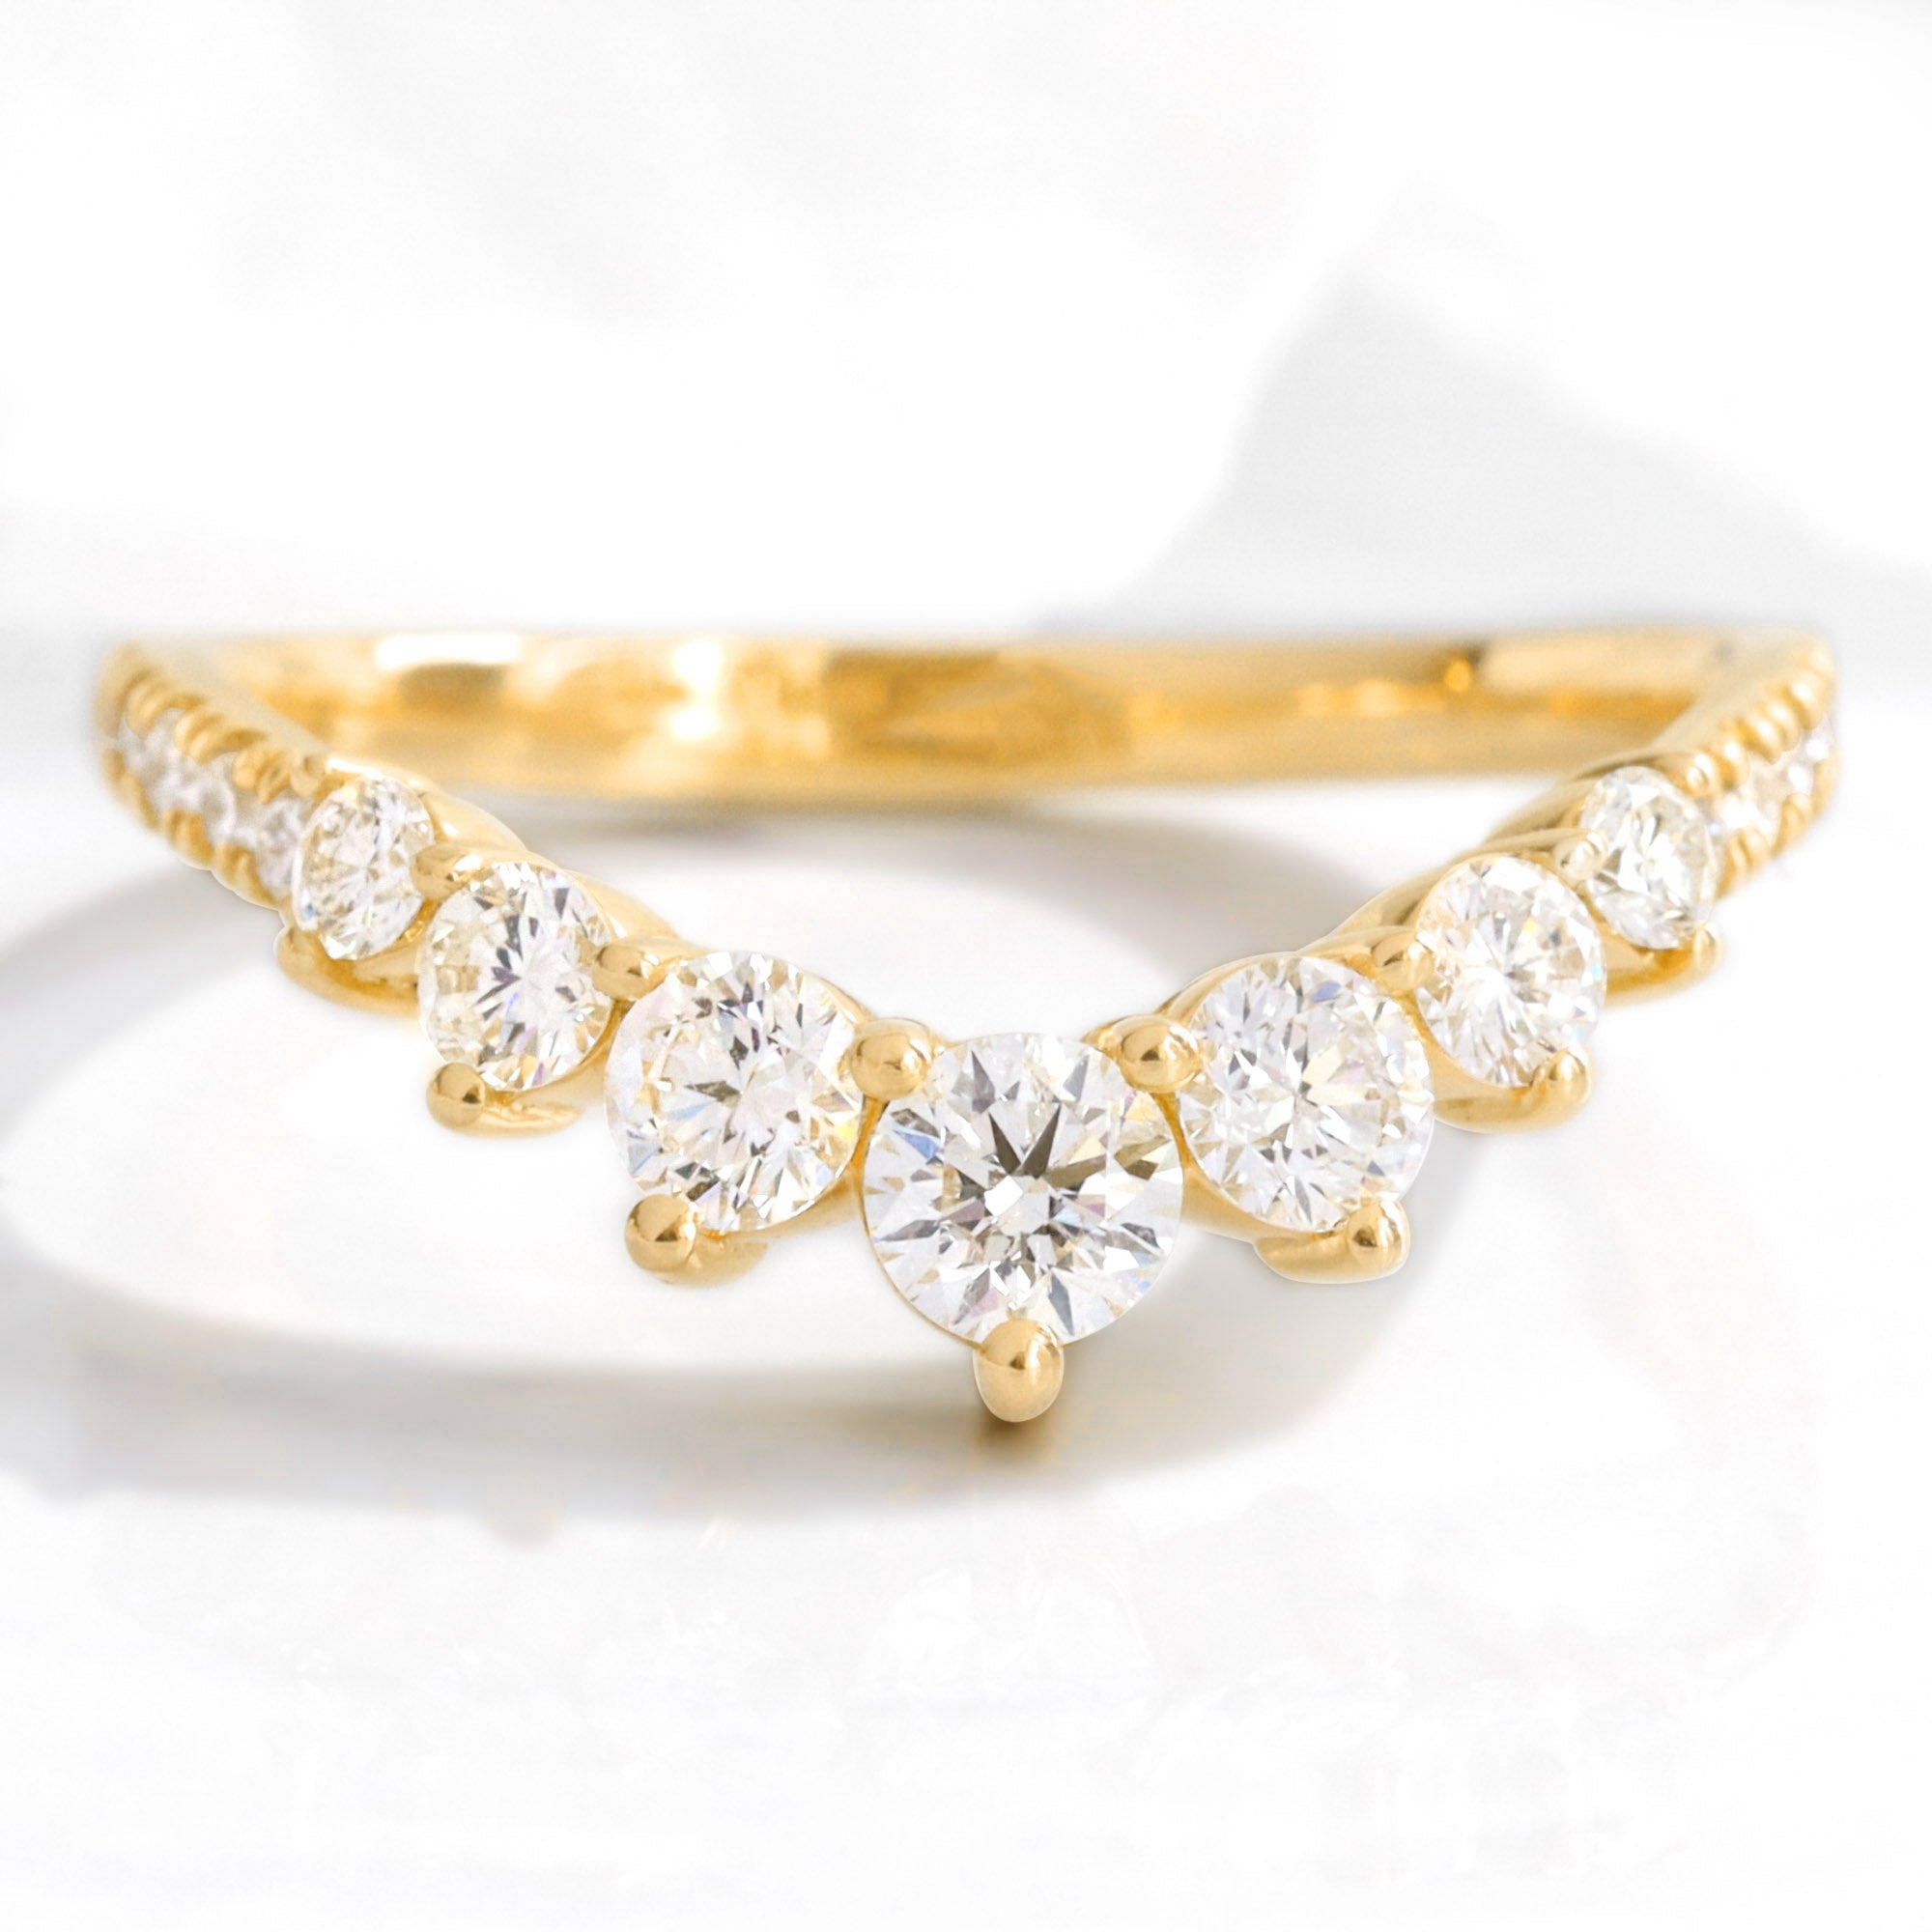 Large 7 diamond wedding ring yellow gold U shaped curved pave band la more design jewelry